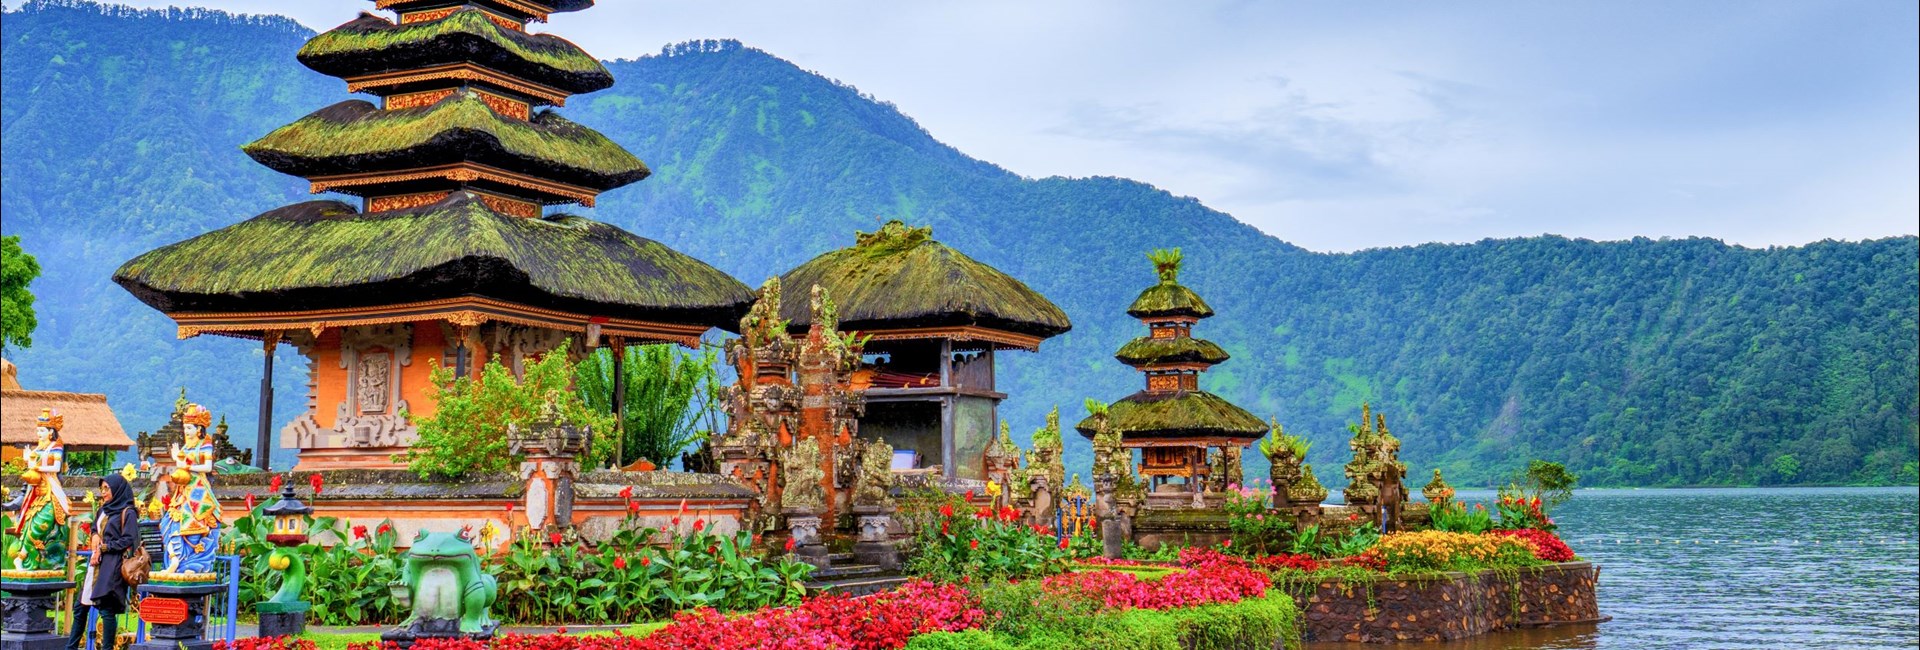 Colourful temple in Bali